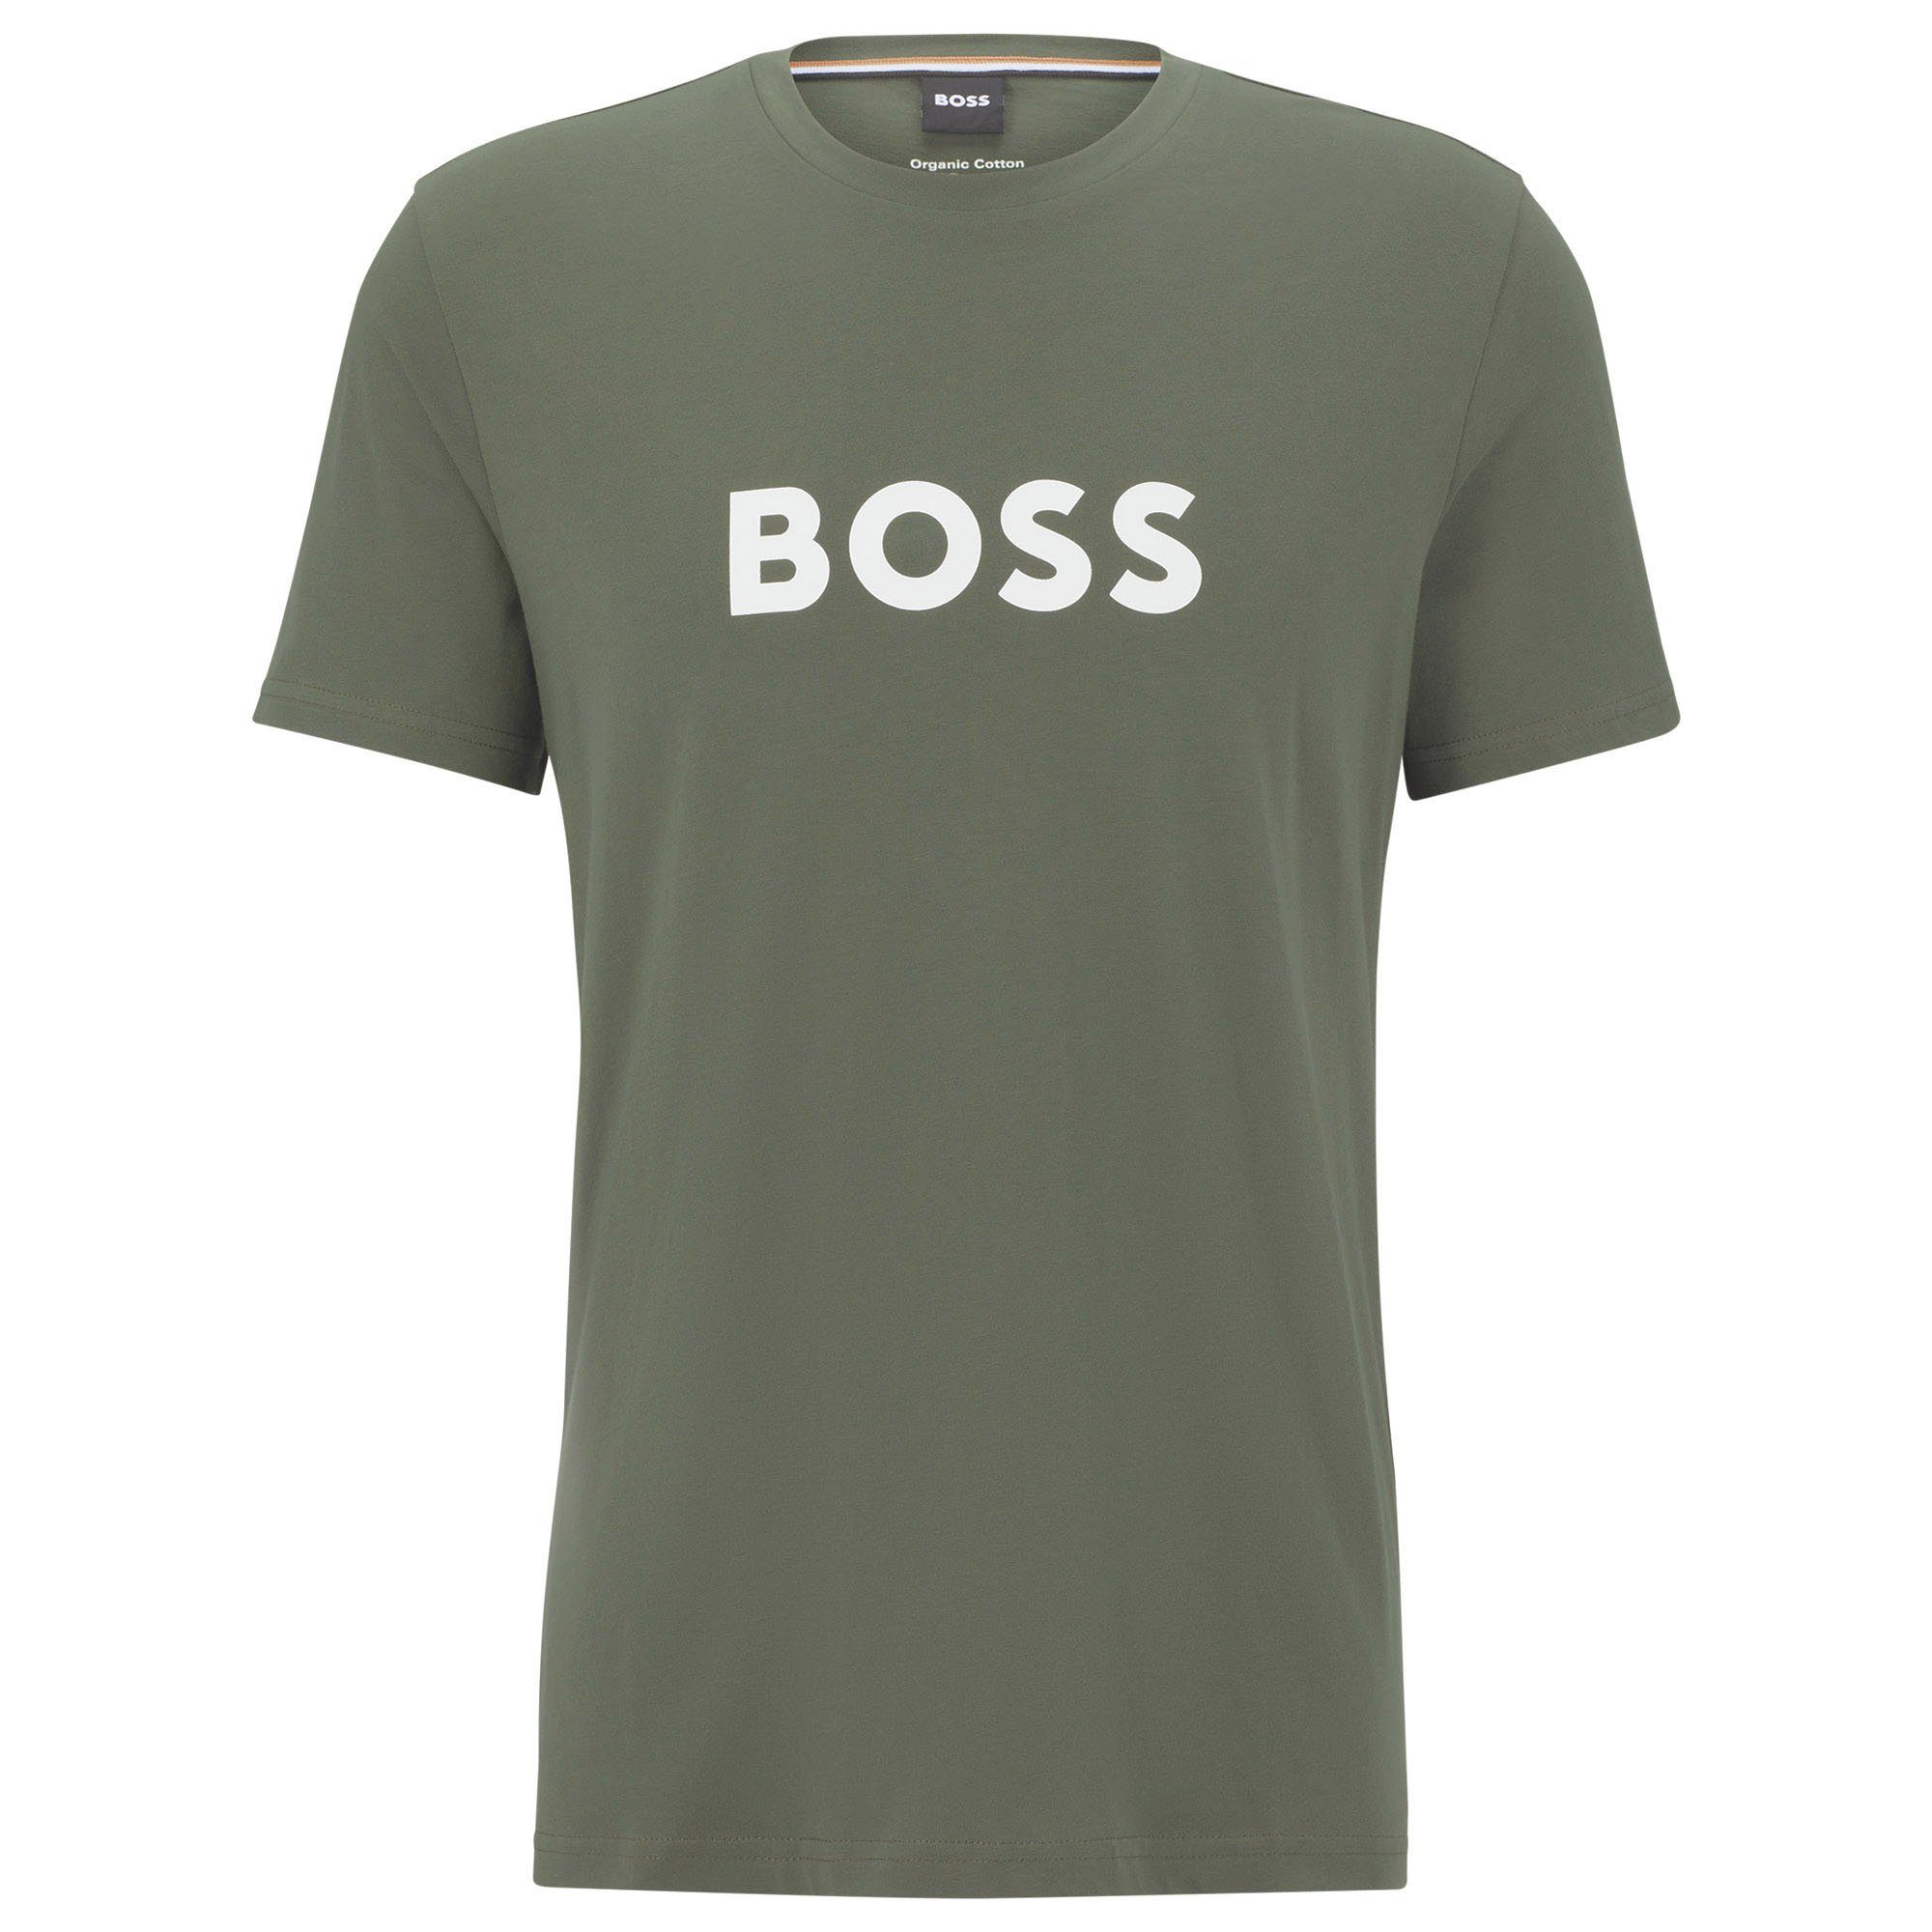 Jetzt zum supergünstigen Preis im Angebot! BOSS T-Shirt Herren T-Shirt - Grün Kurzarm RN, Rundhals, T-Shirt